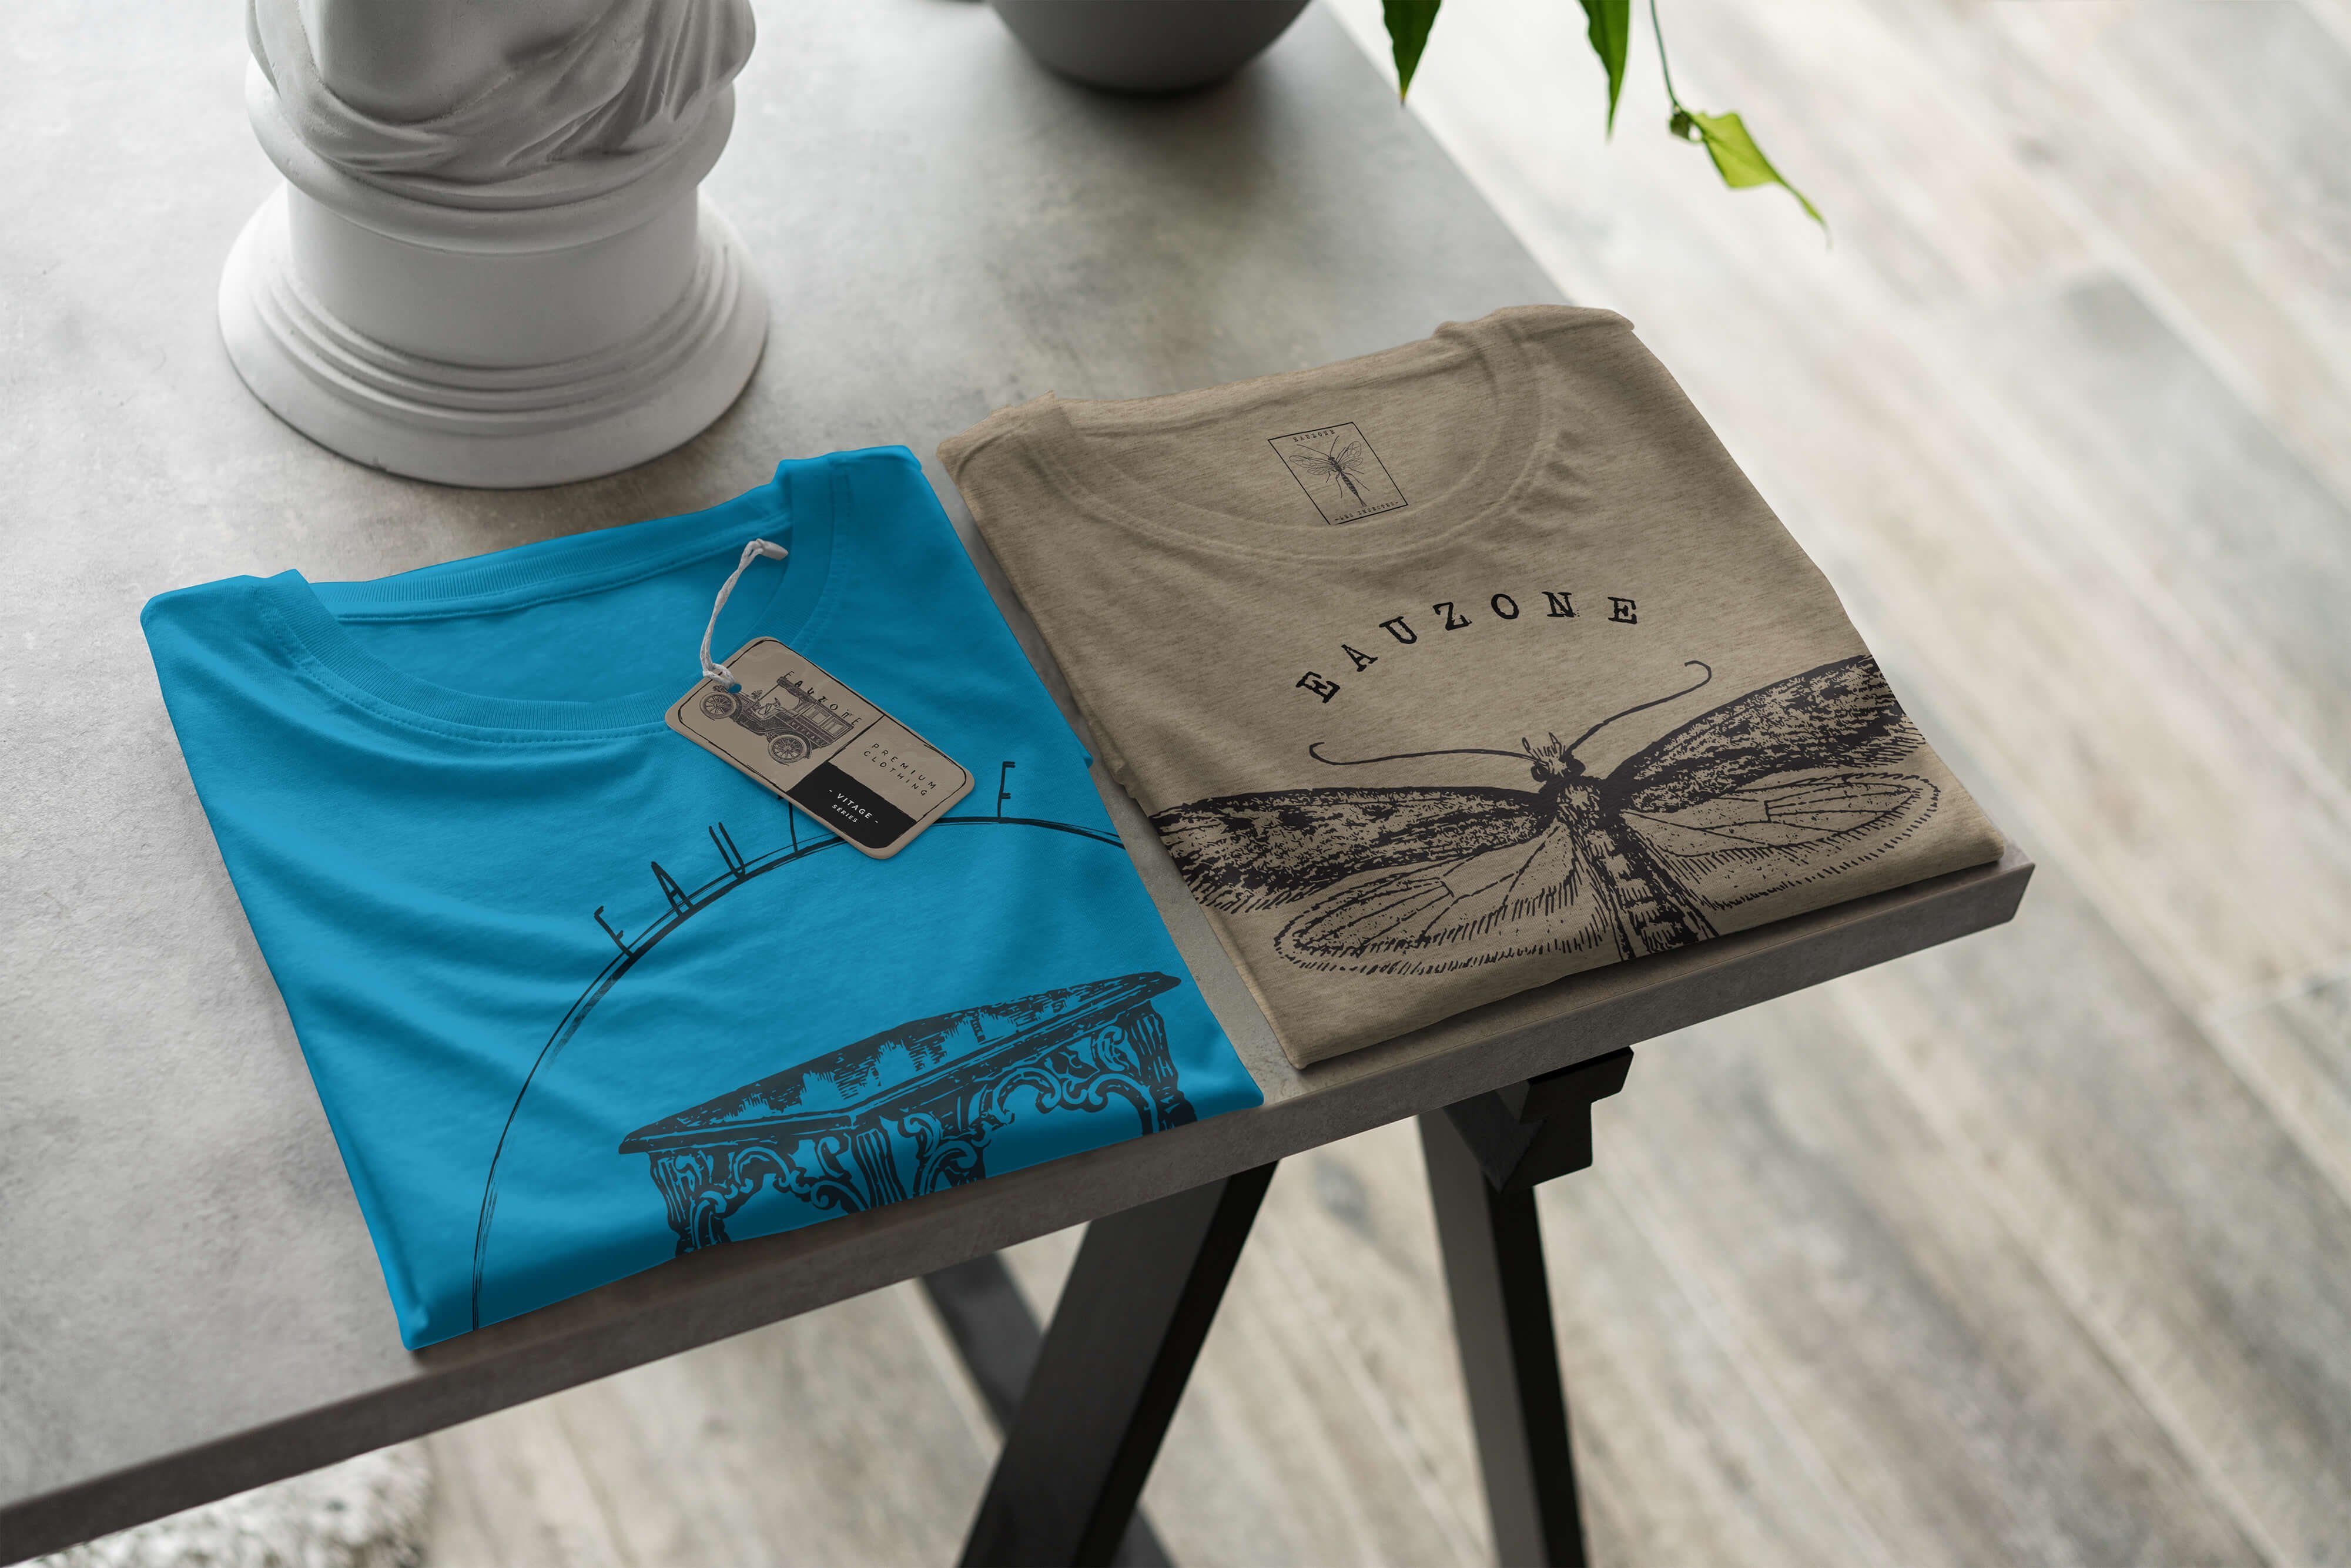 Vintage Atoll Beistelltisch Sinus Art Herren T-Shirt T-Shirt